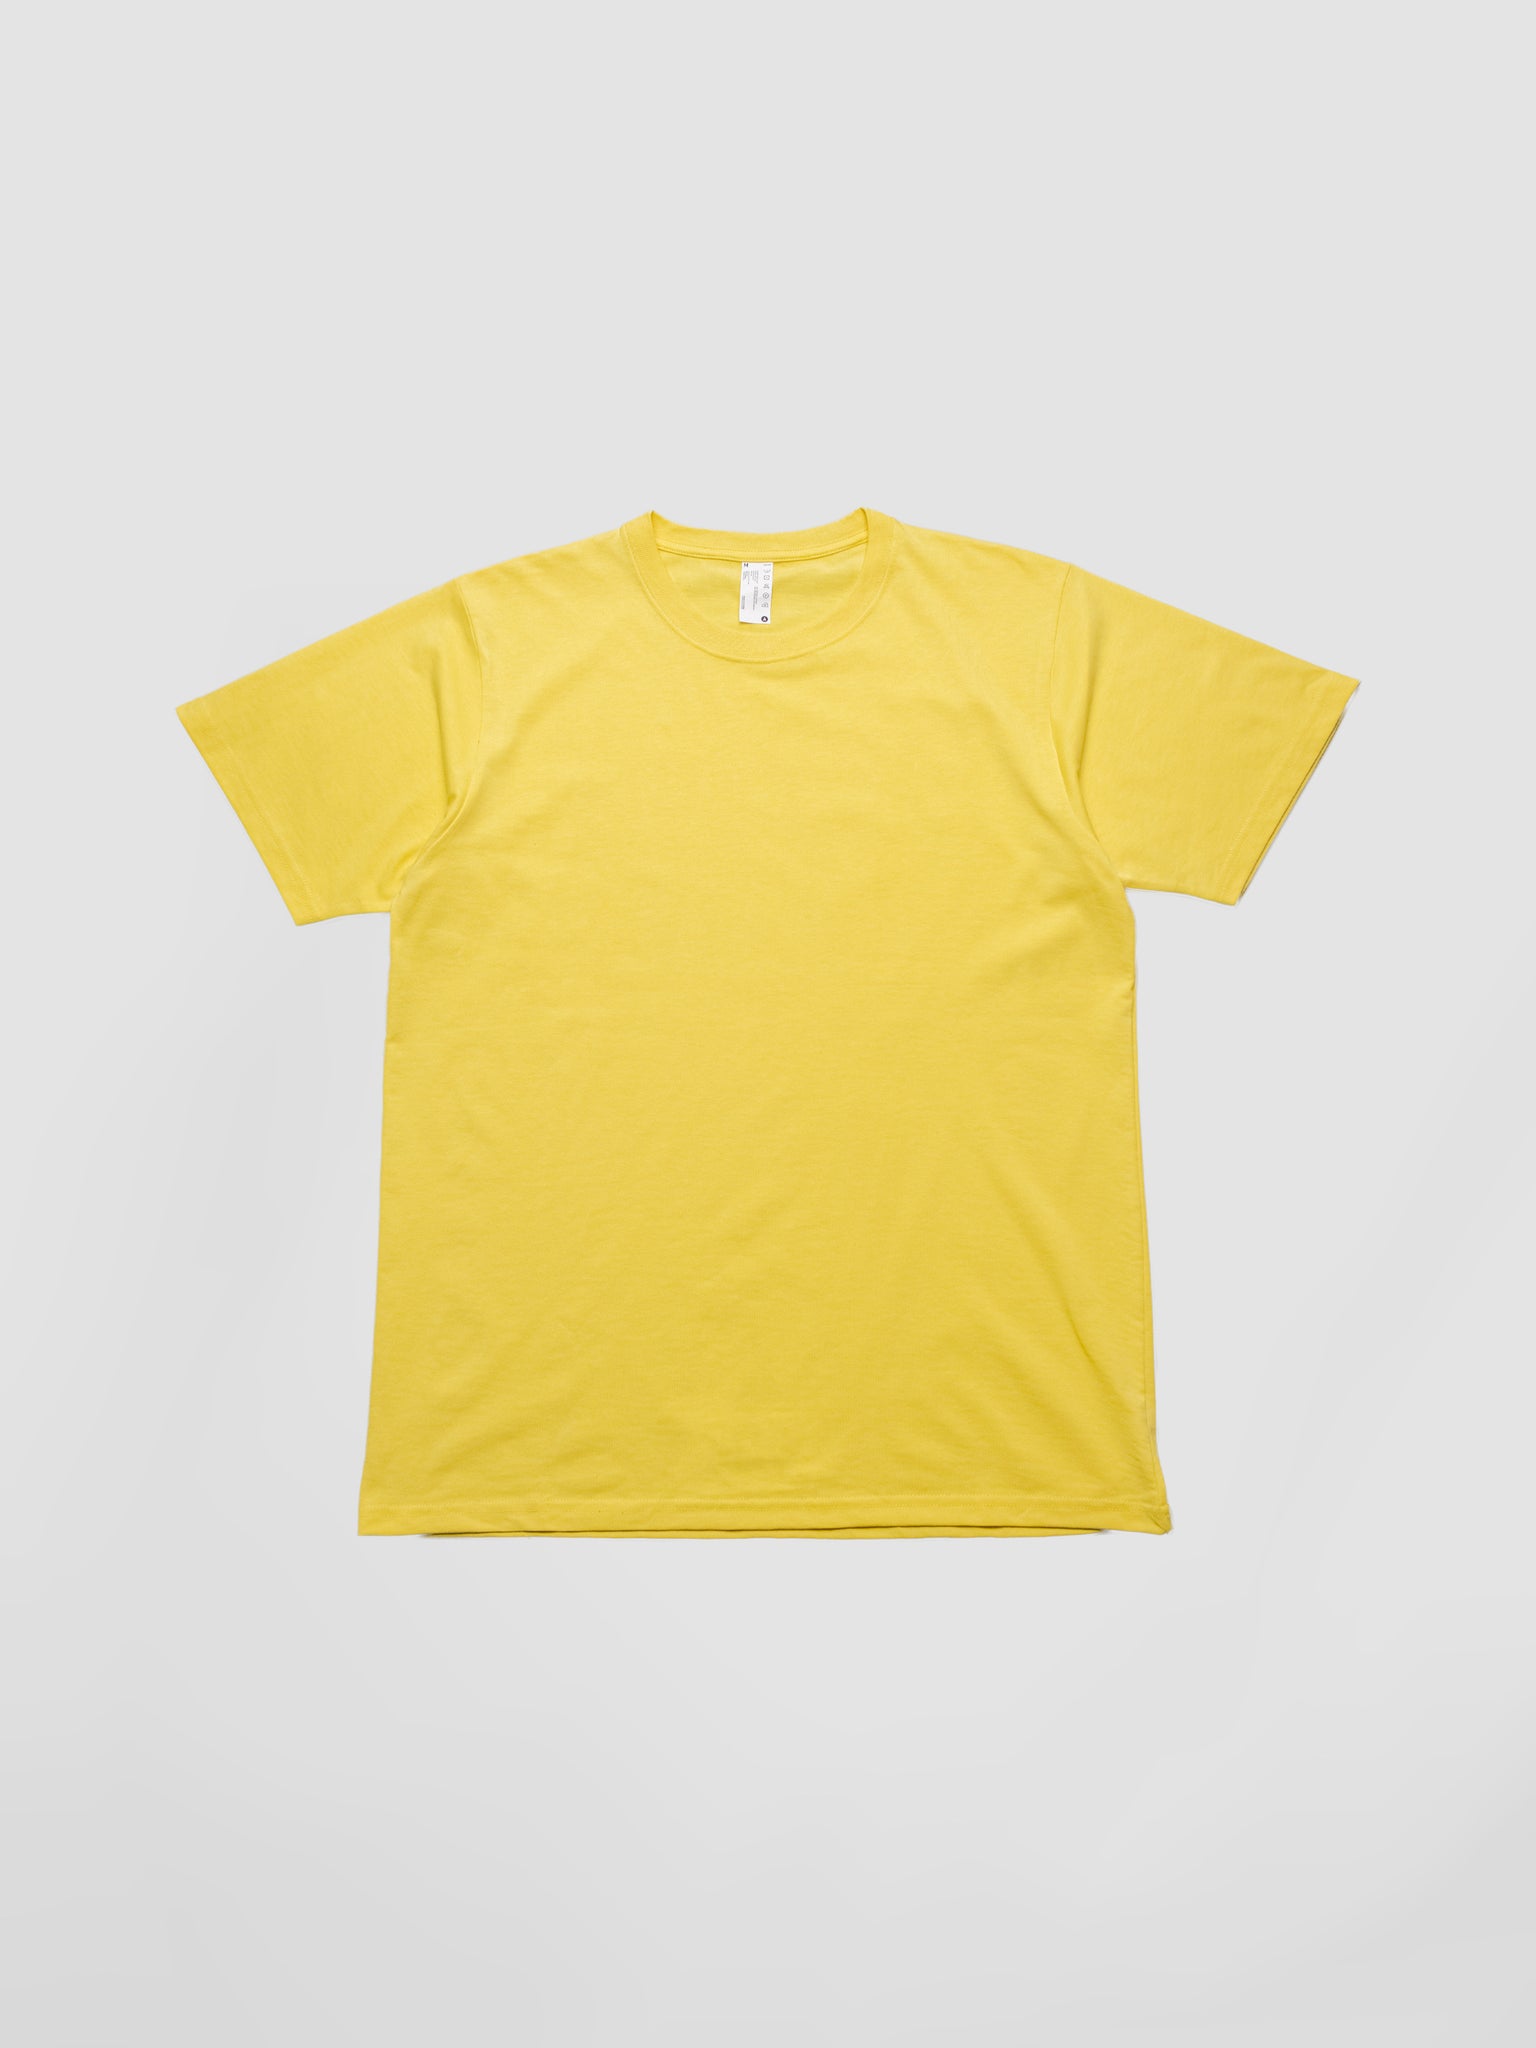 BLANK - Standard Fit T-Shirt Illuminating - v2